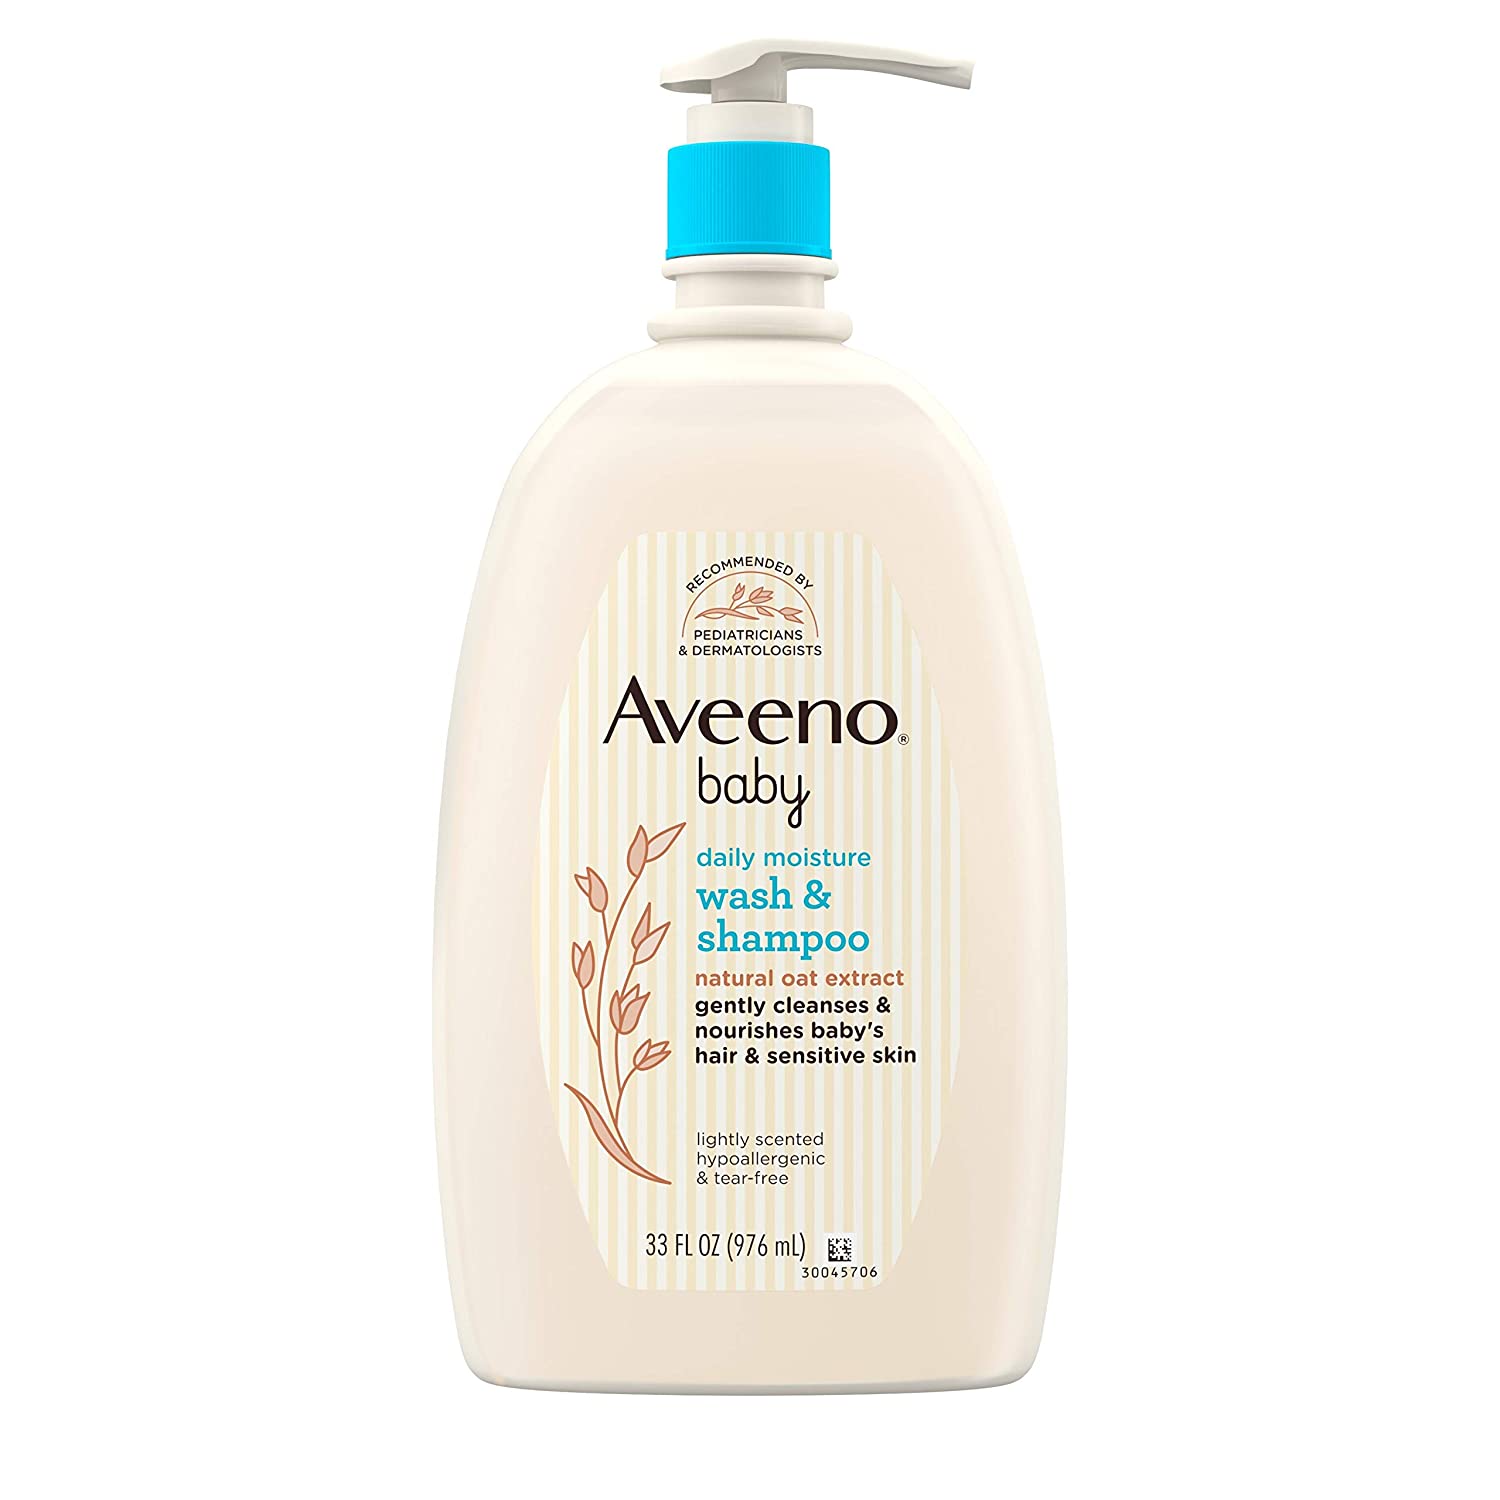 AVEENO BABY Daily moisture wash & shampoo, natural oat extract - 976ml